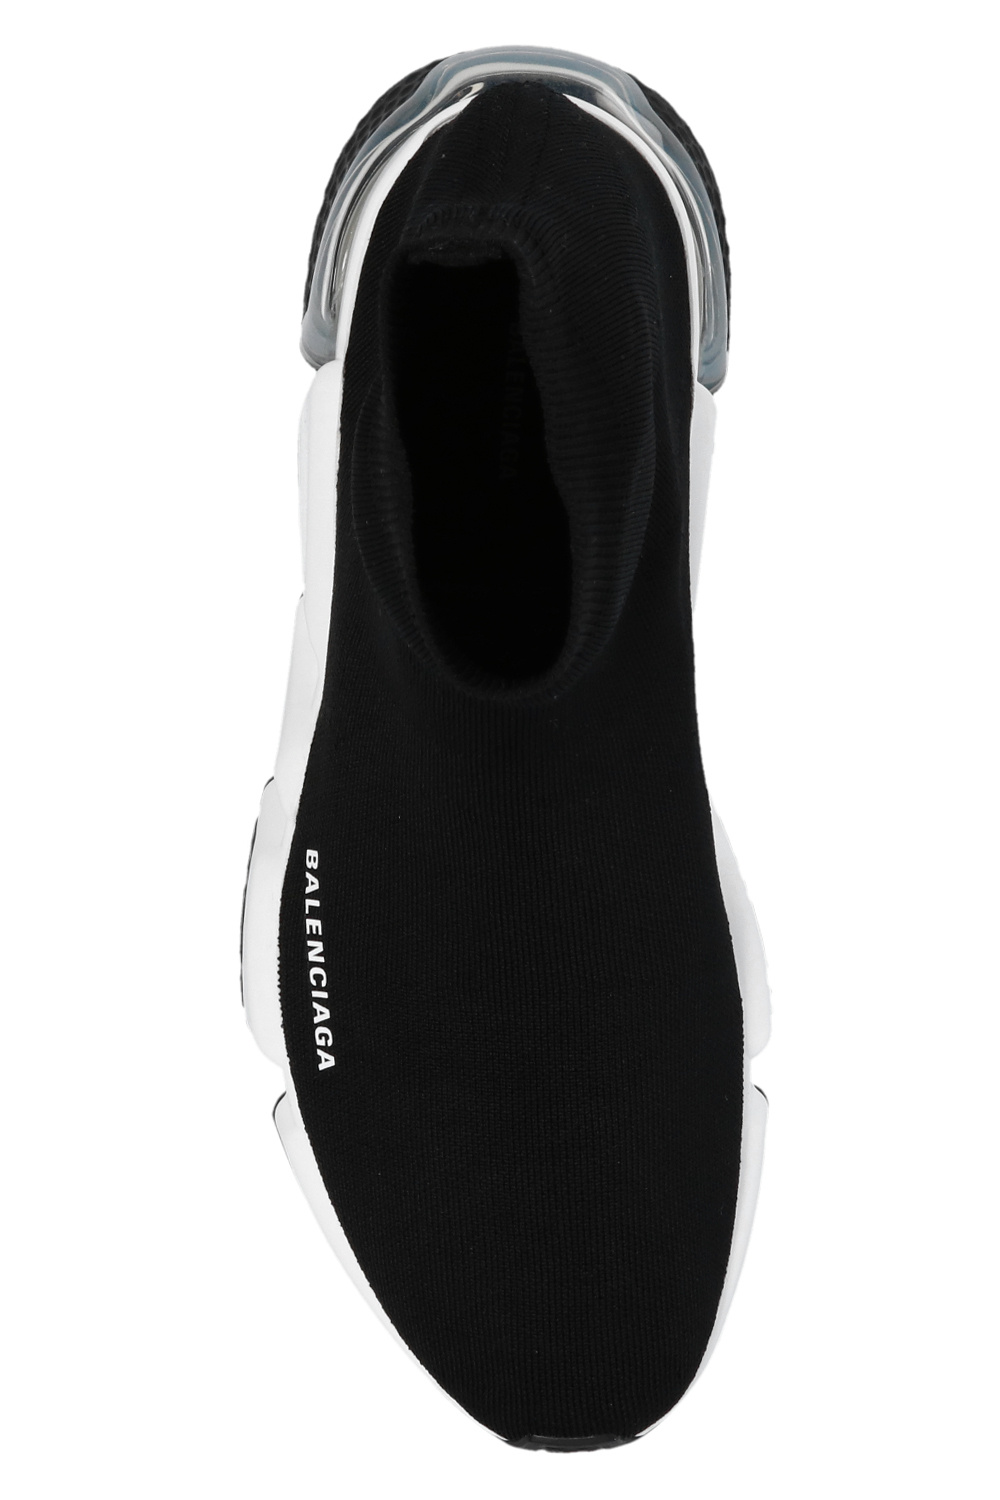 Balenciaga ‘Speed LT Clear’ sneakers